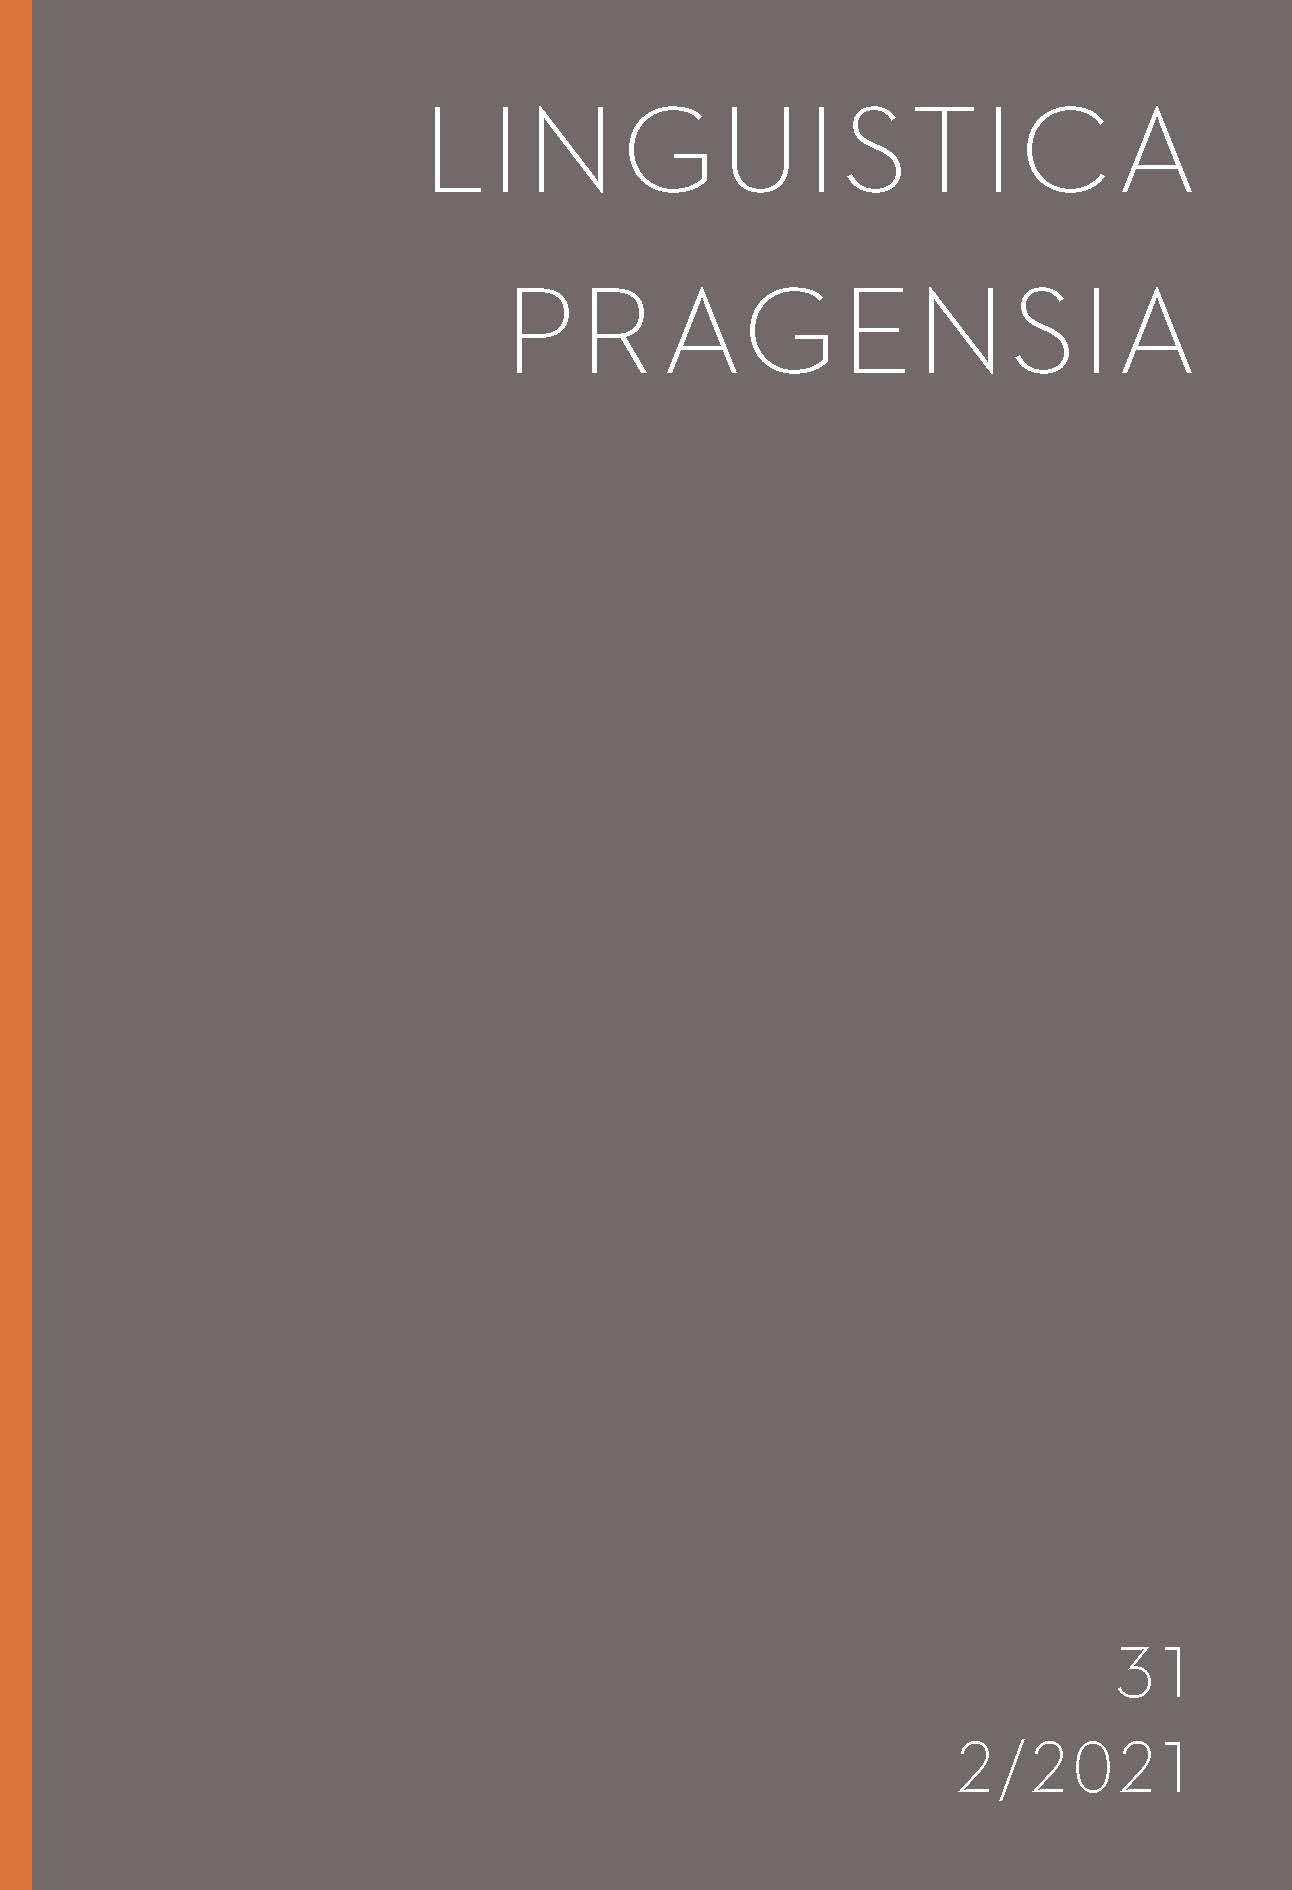 Publications of Professor Libuše Dušková, Nonagerian